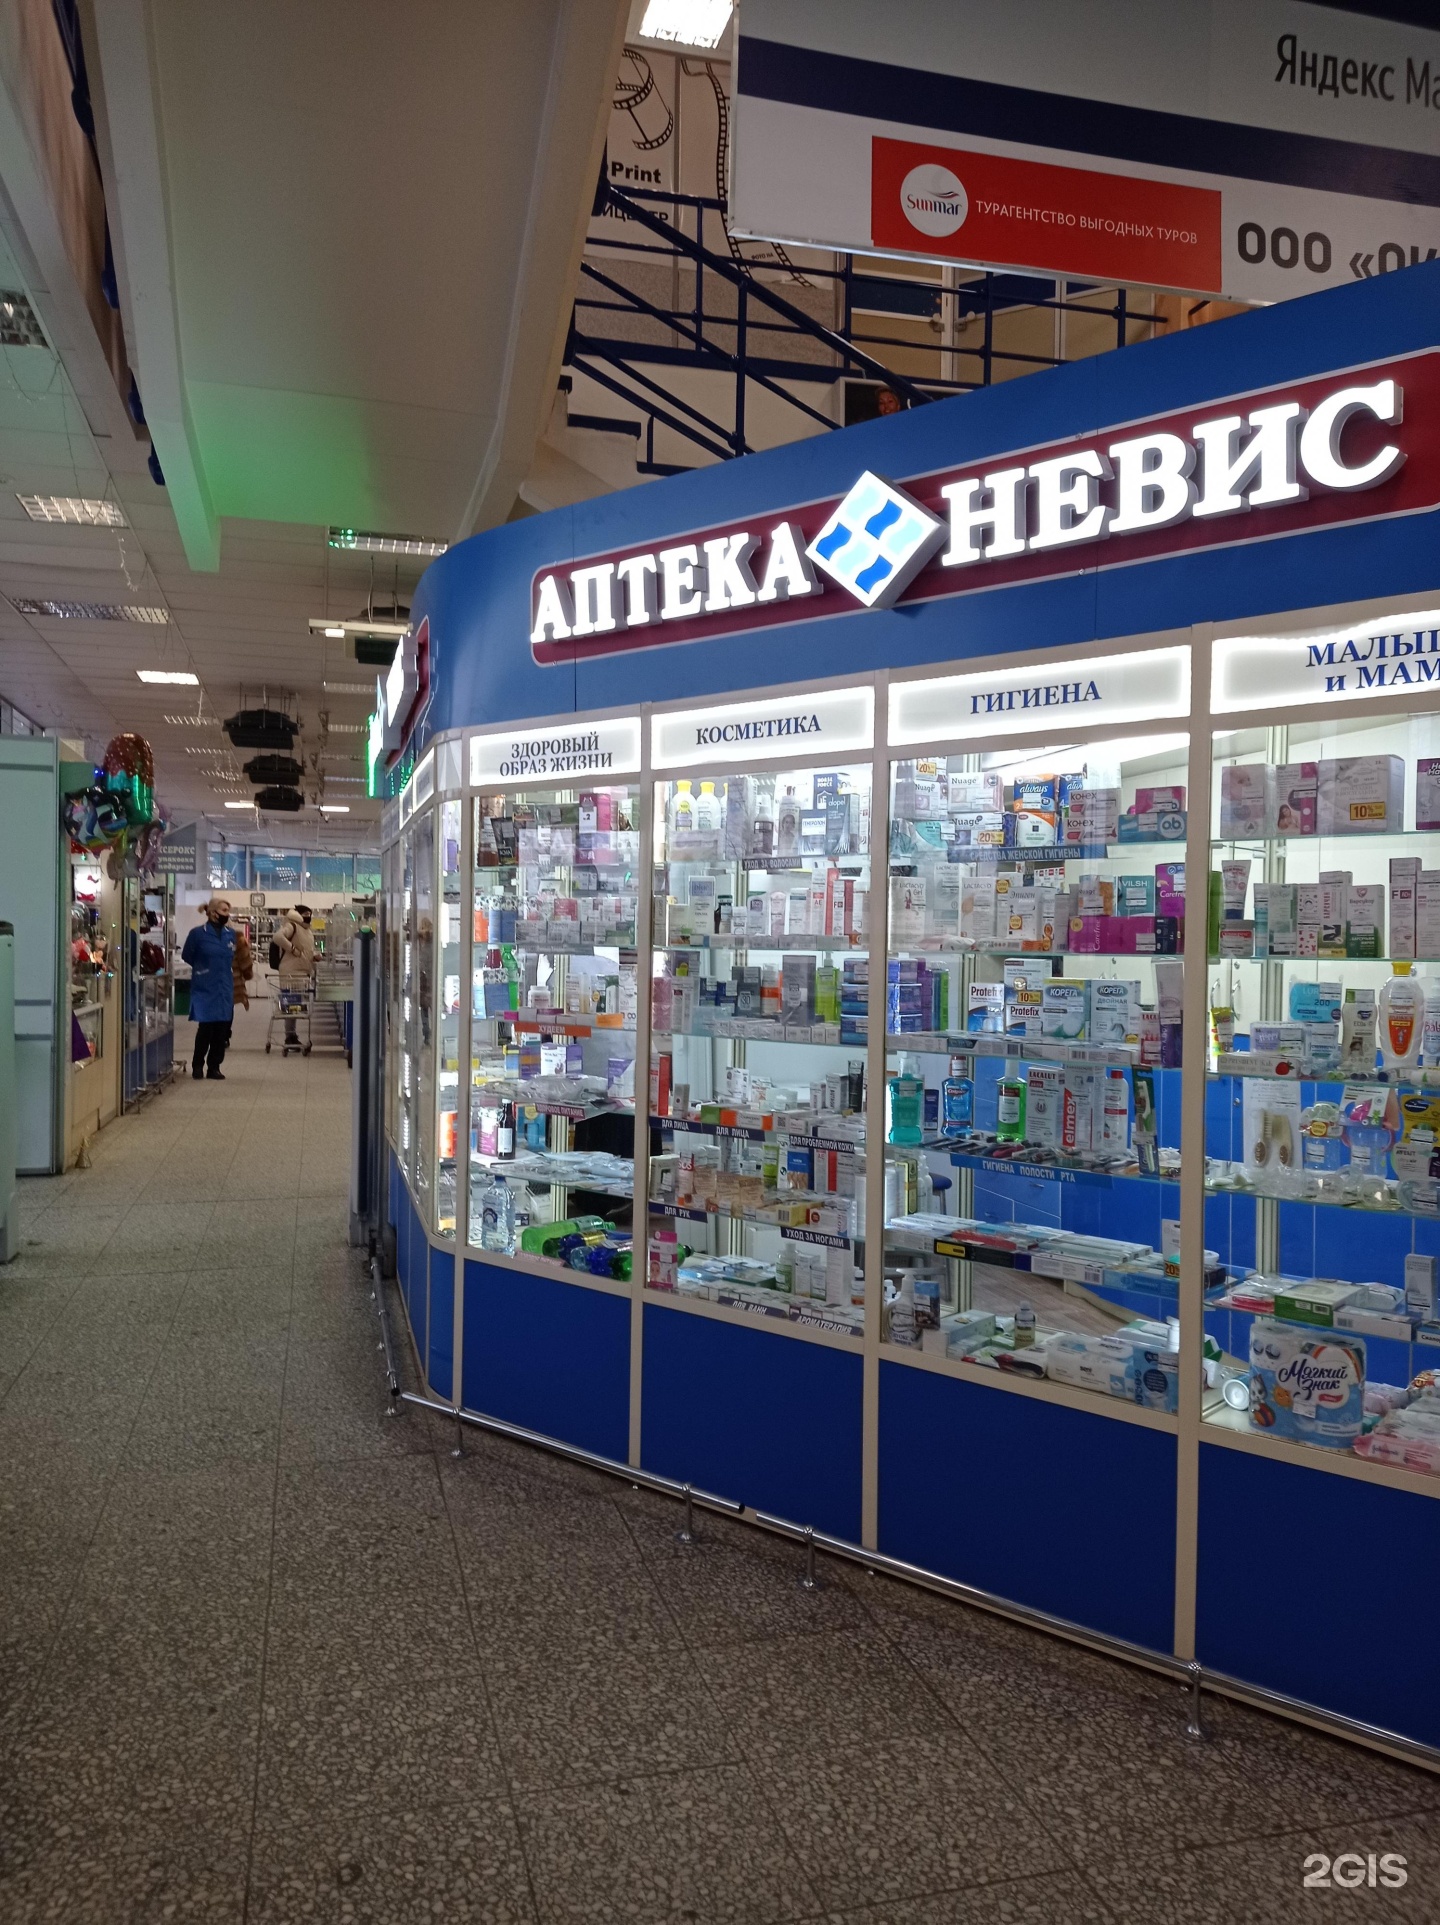 Аптеки невис санкт петербург